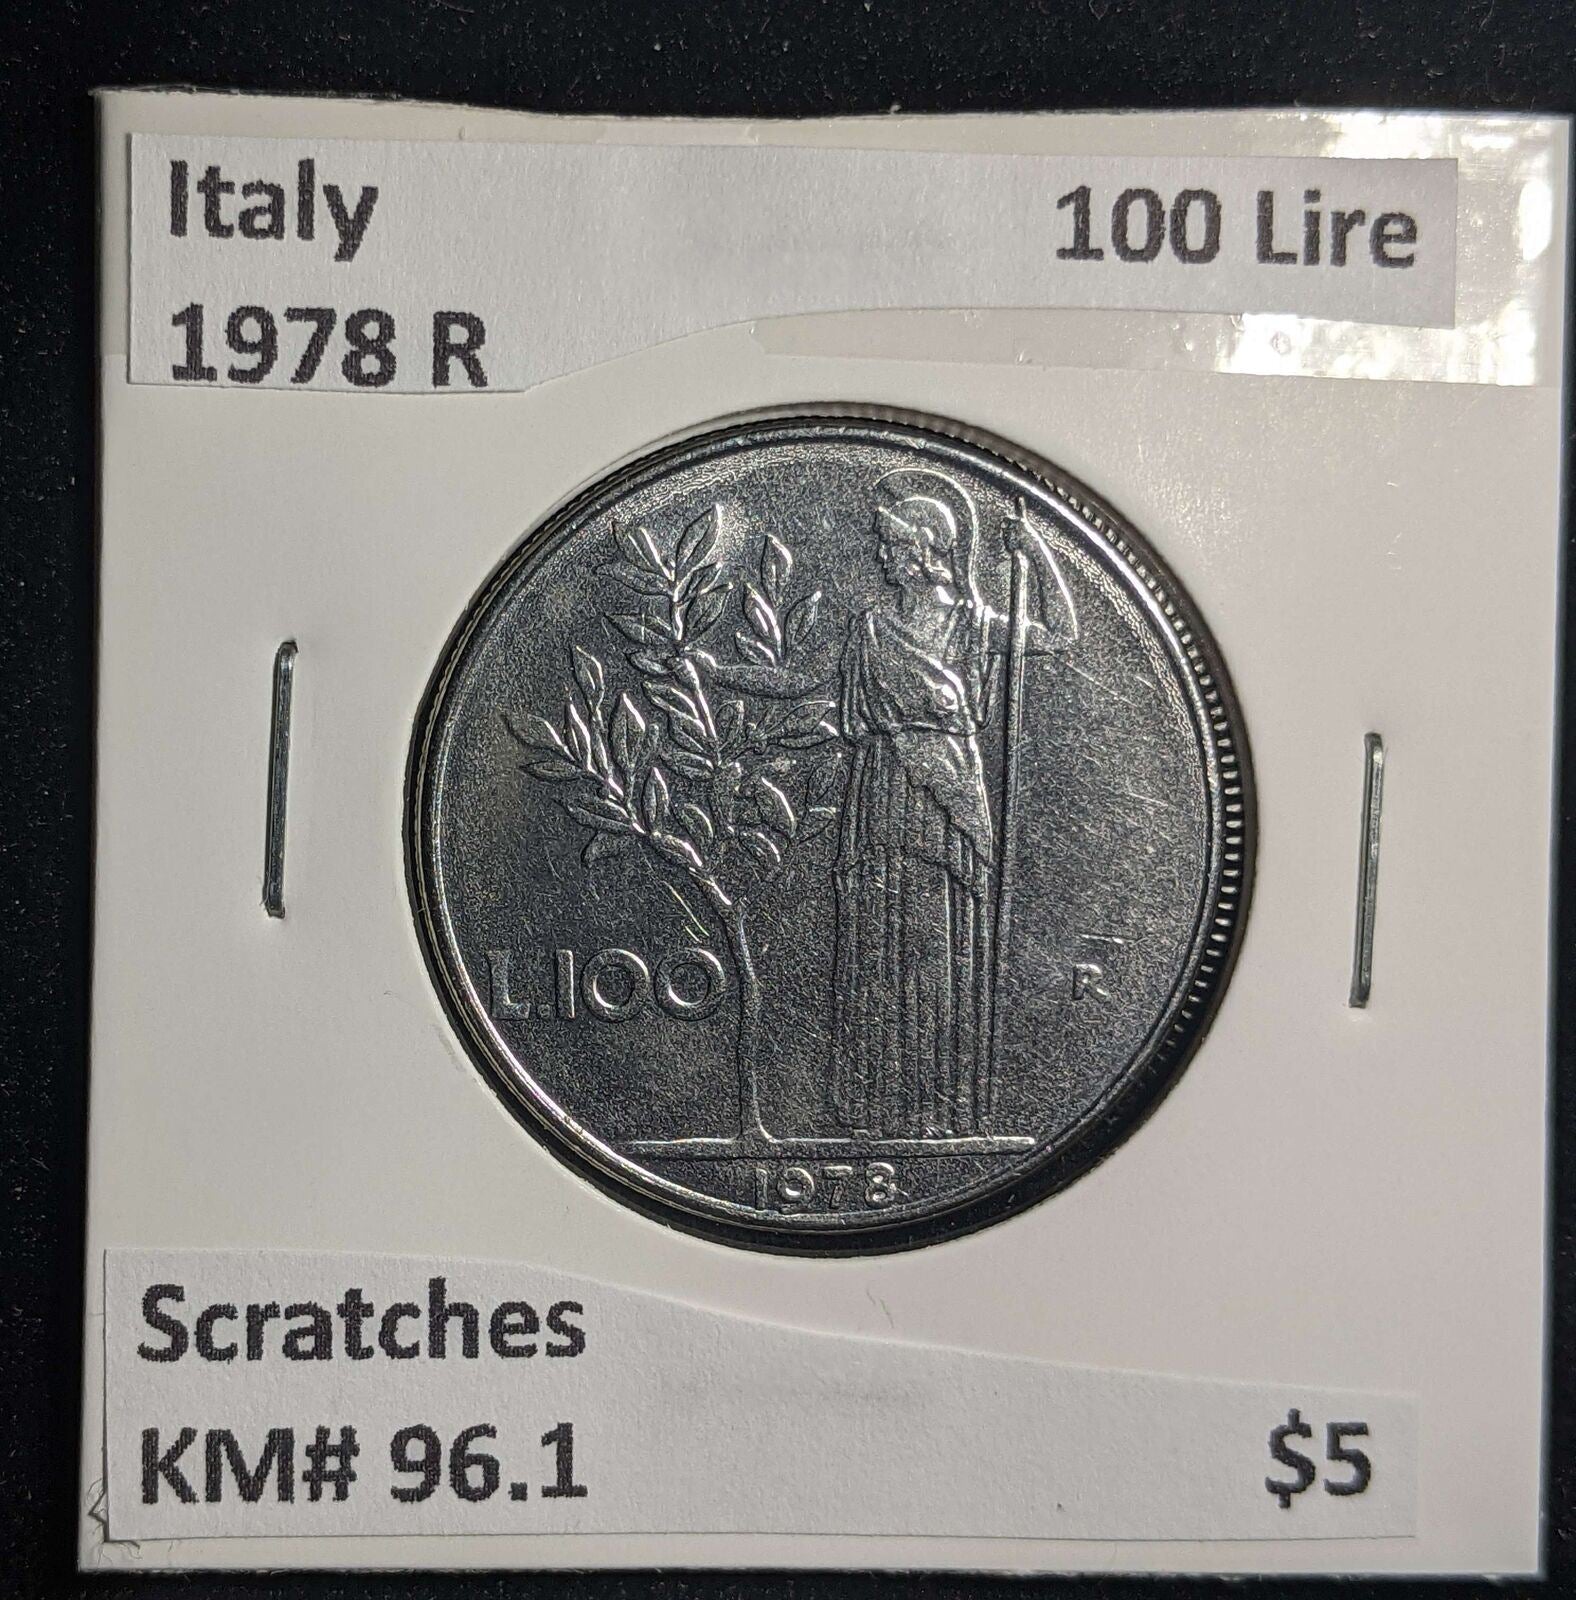 Italy 1978 R 100 Lire KM# 96.1 Scratches #1615 #13C